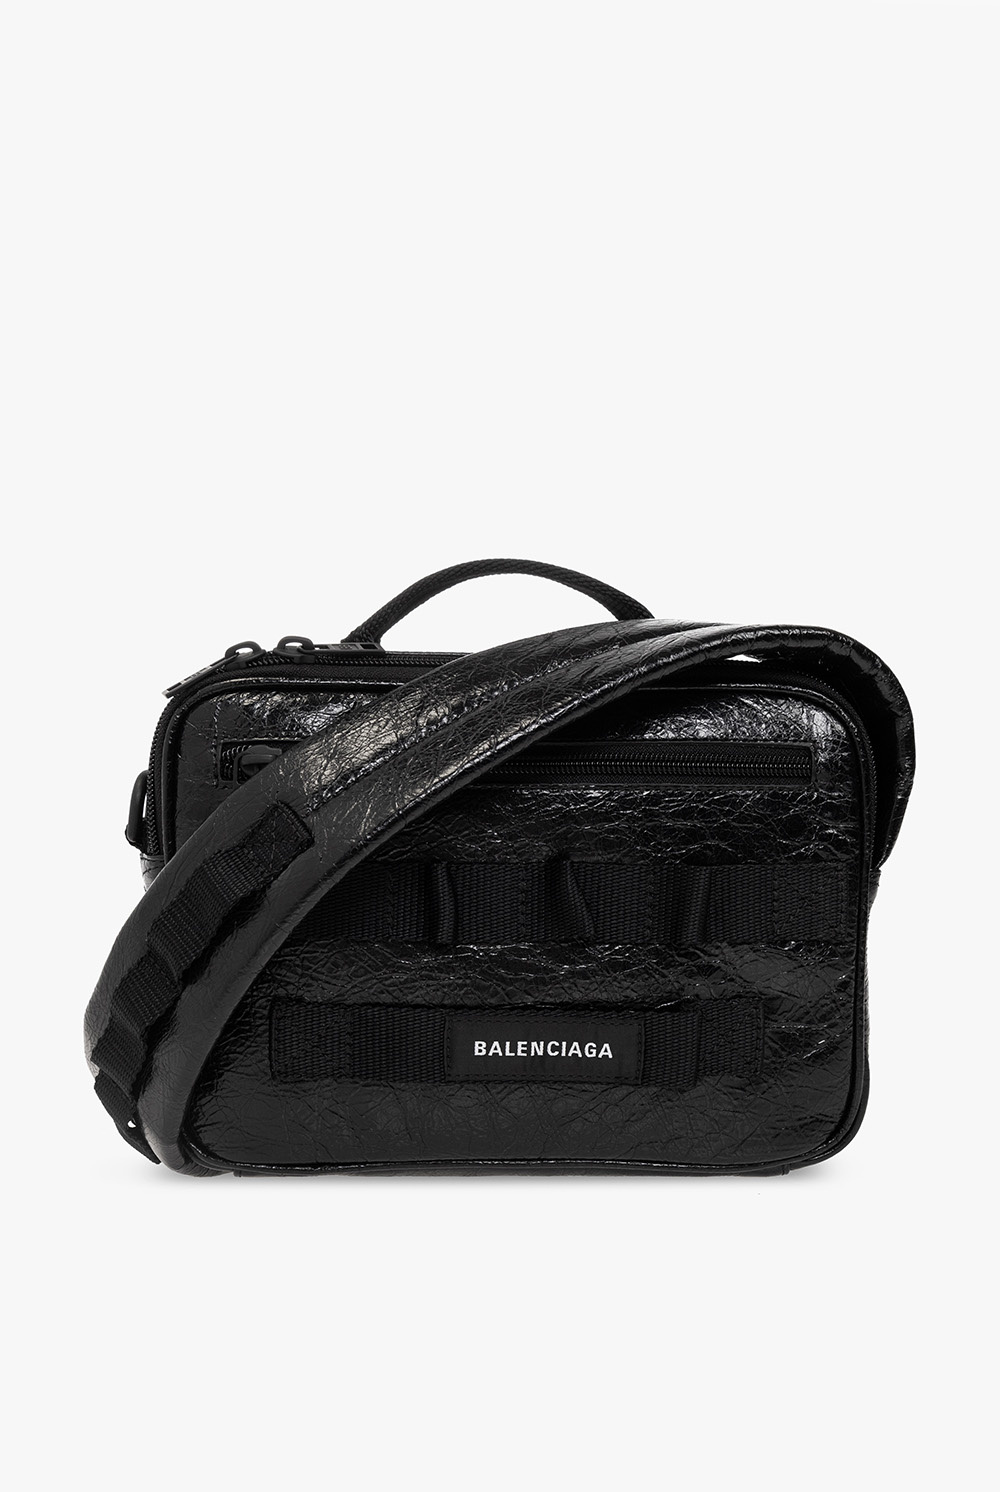 Balenciaga Army Messenger black nylon shoulder bag  TheDoubleF